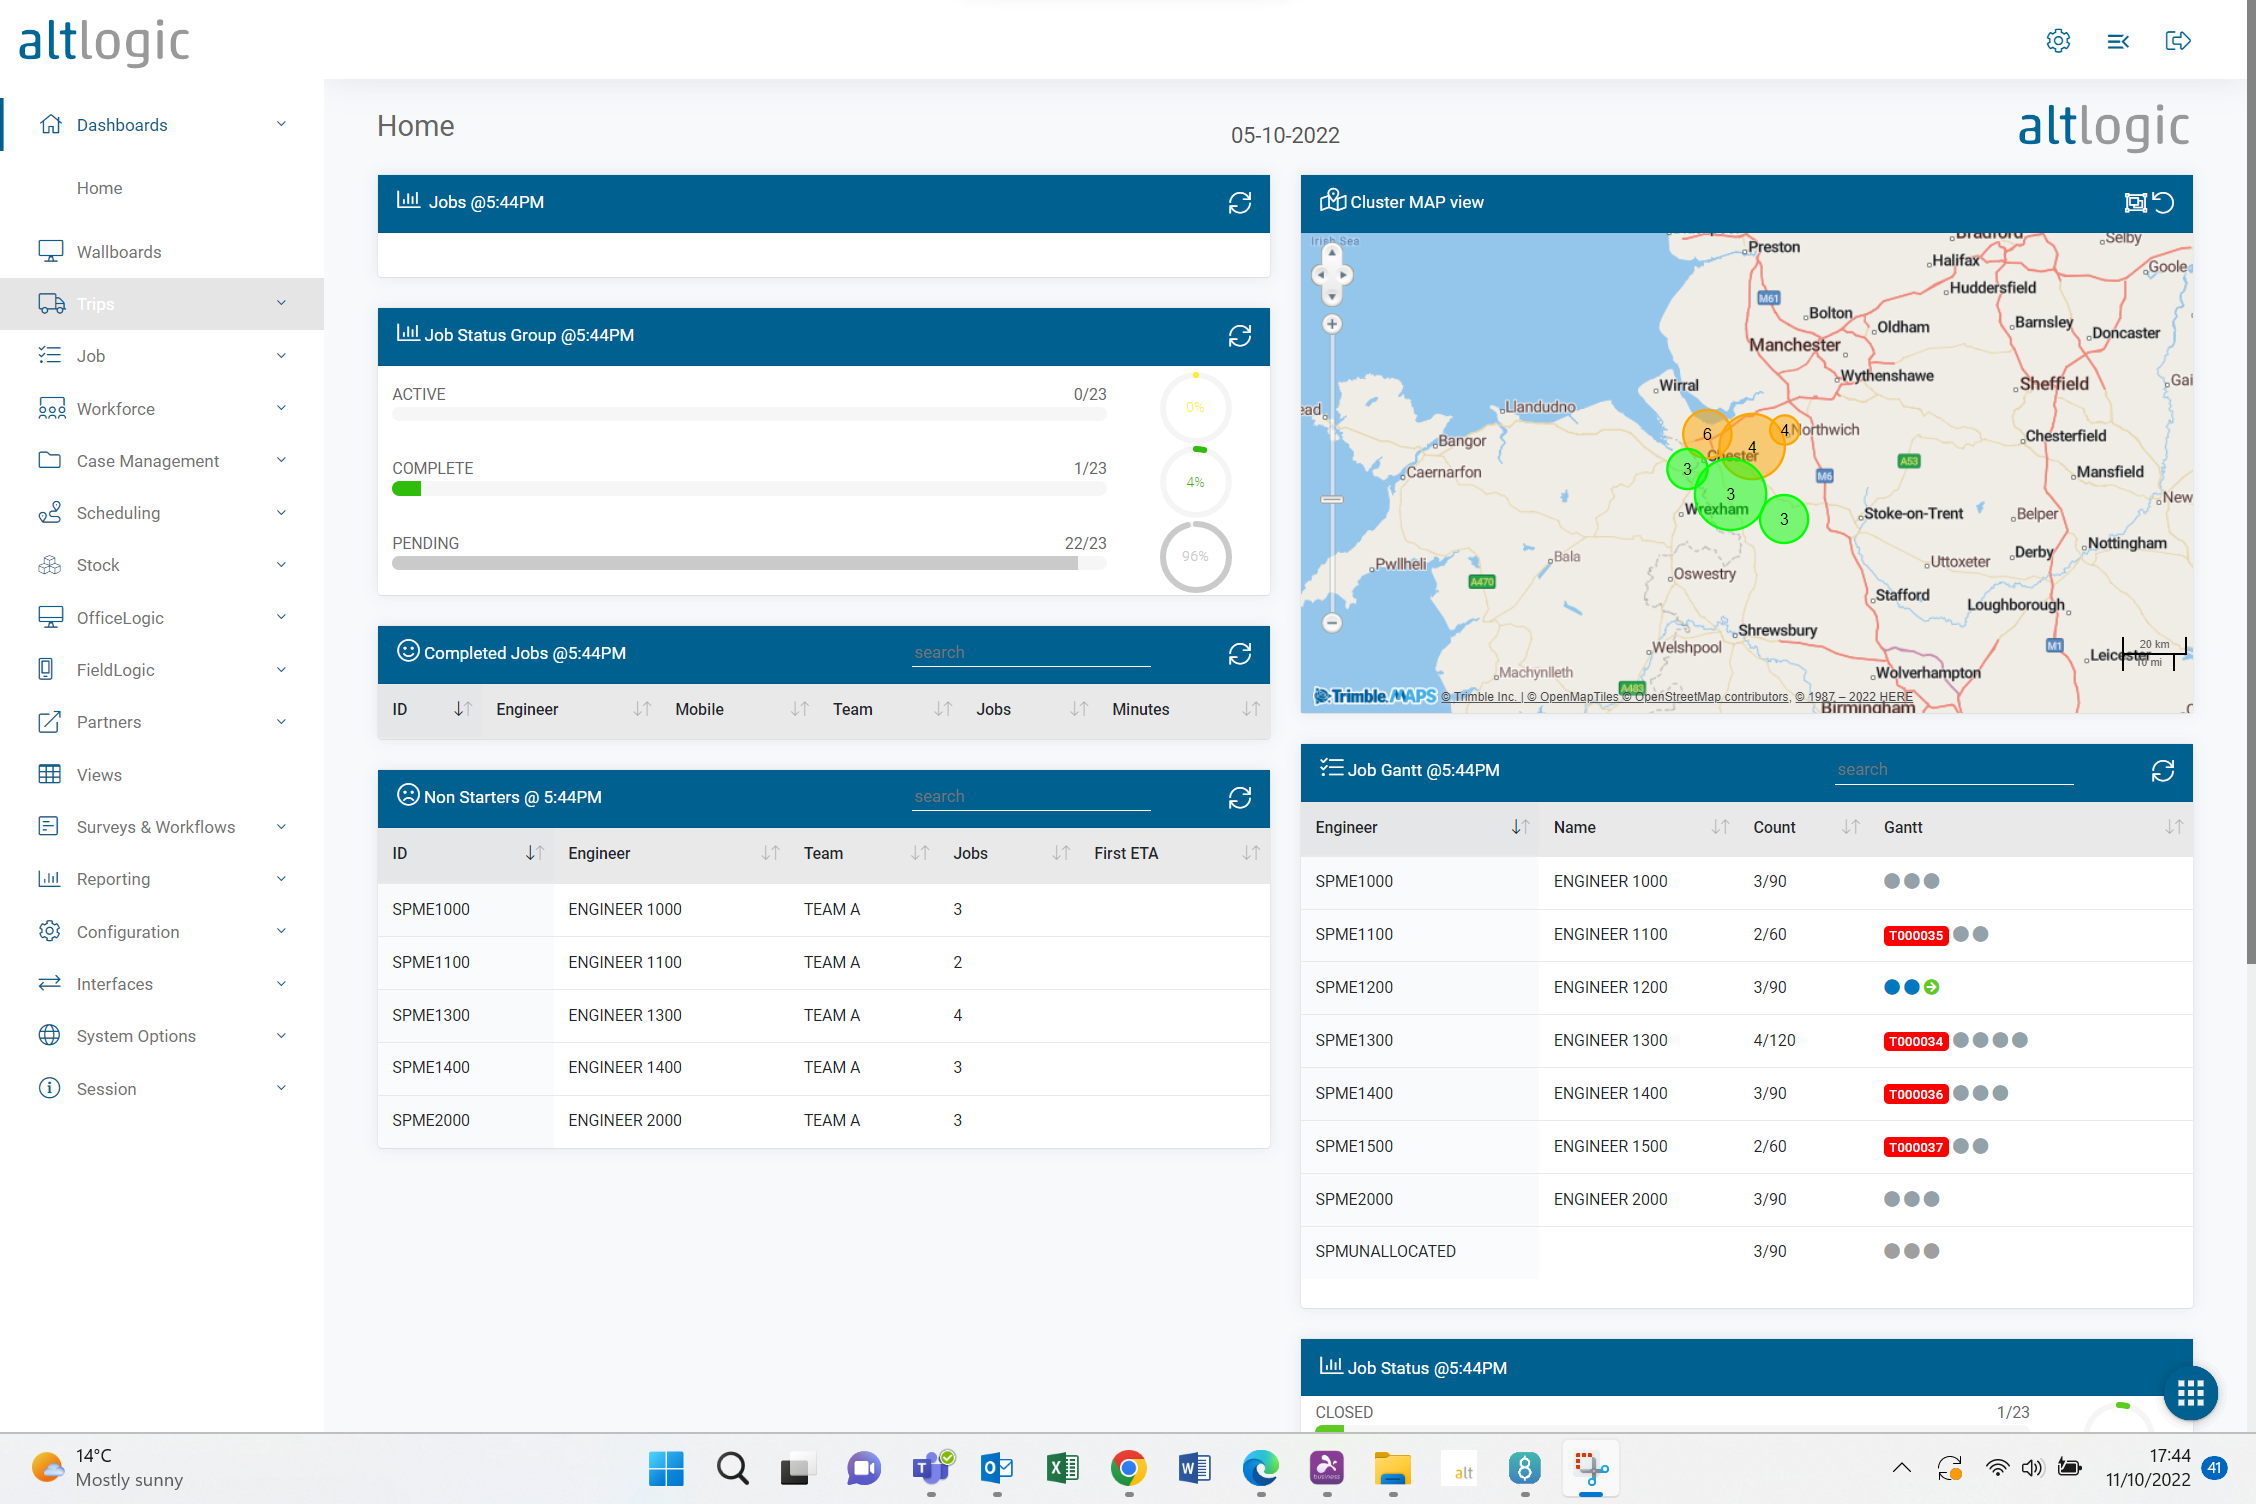 officelogic dashboard showing live performance data